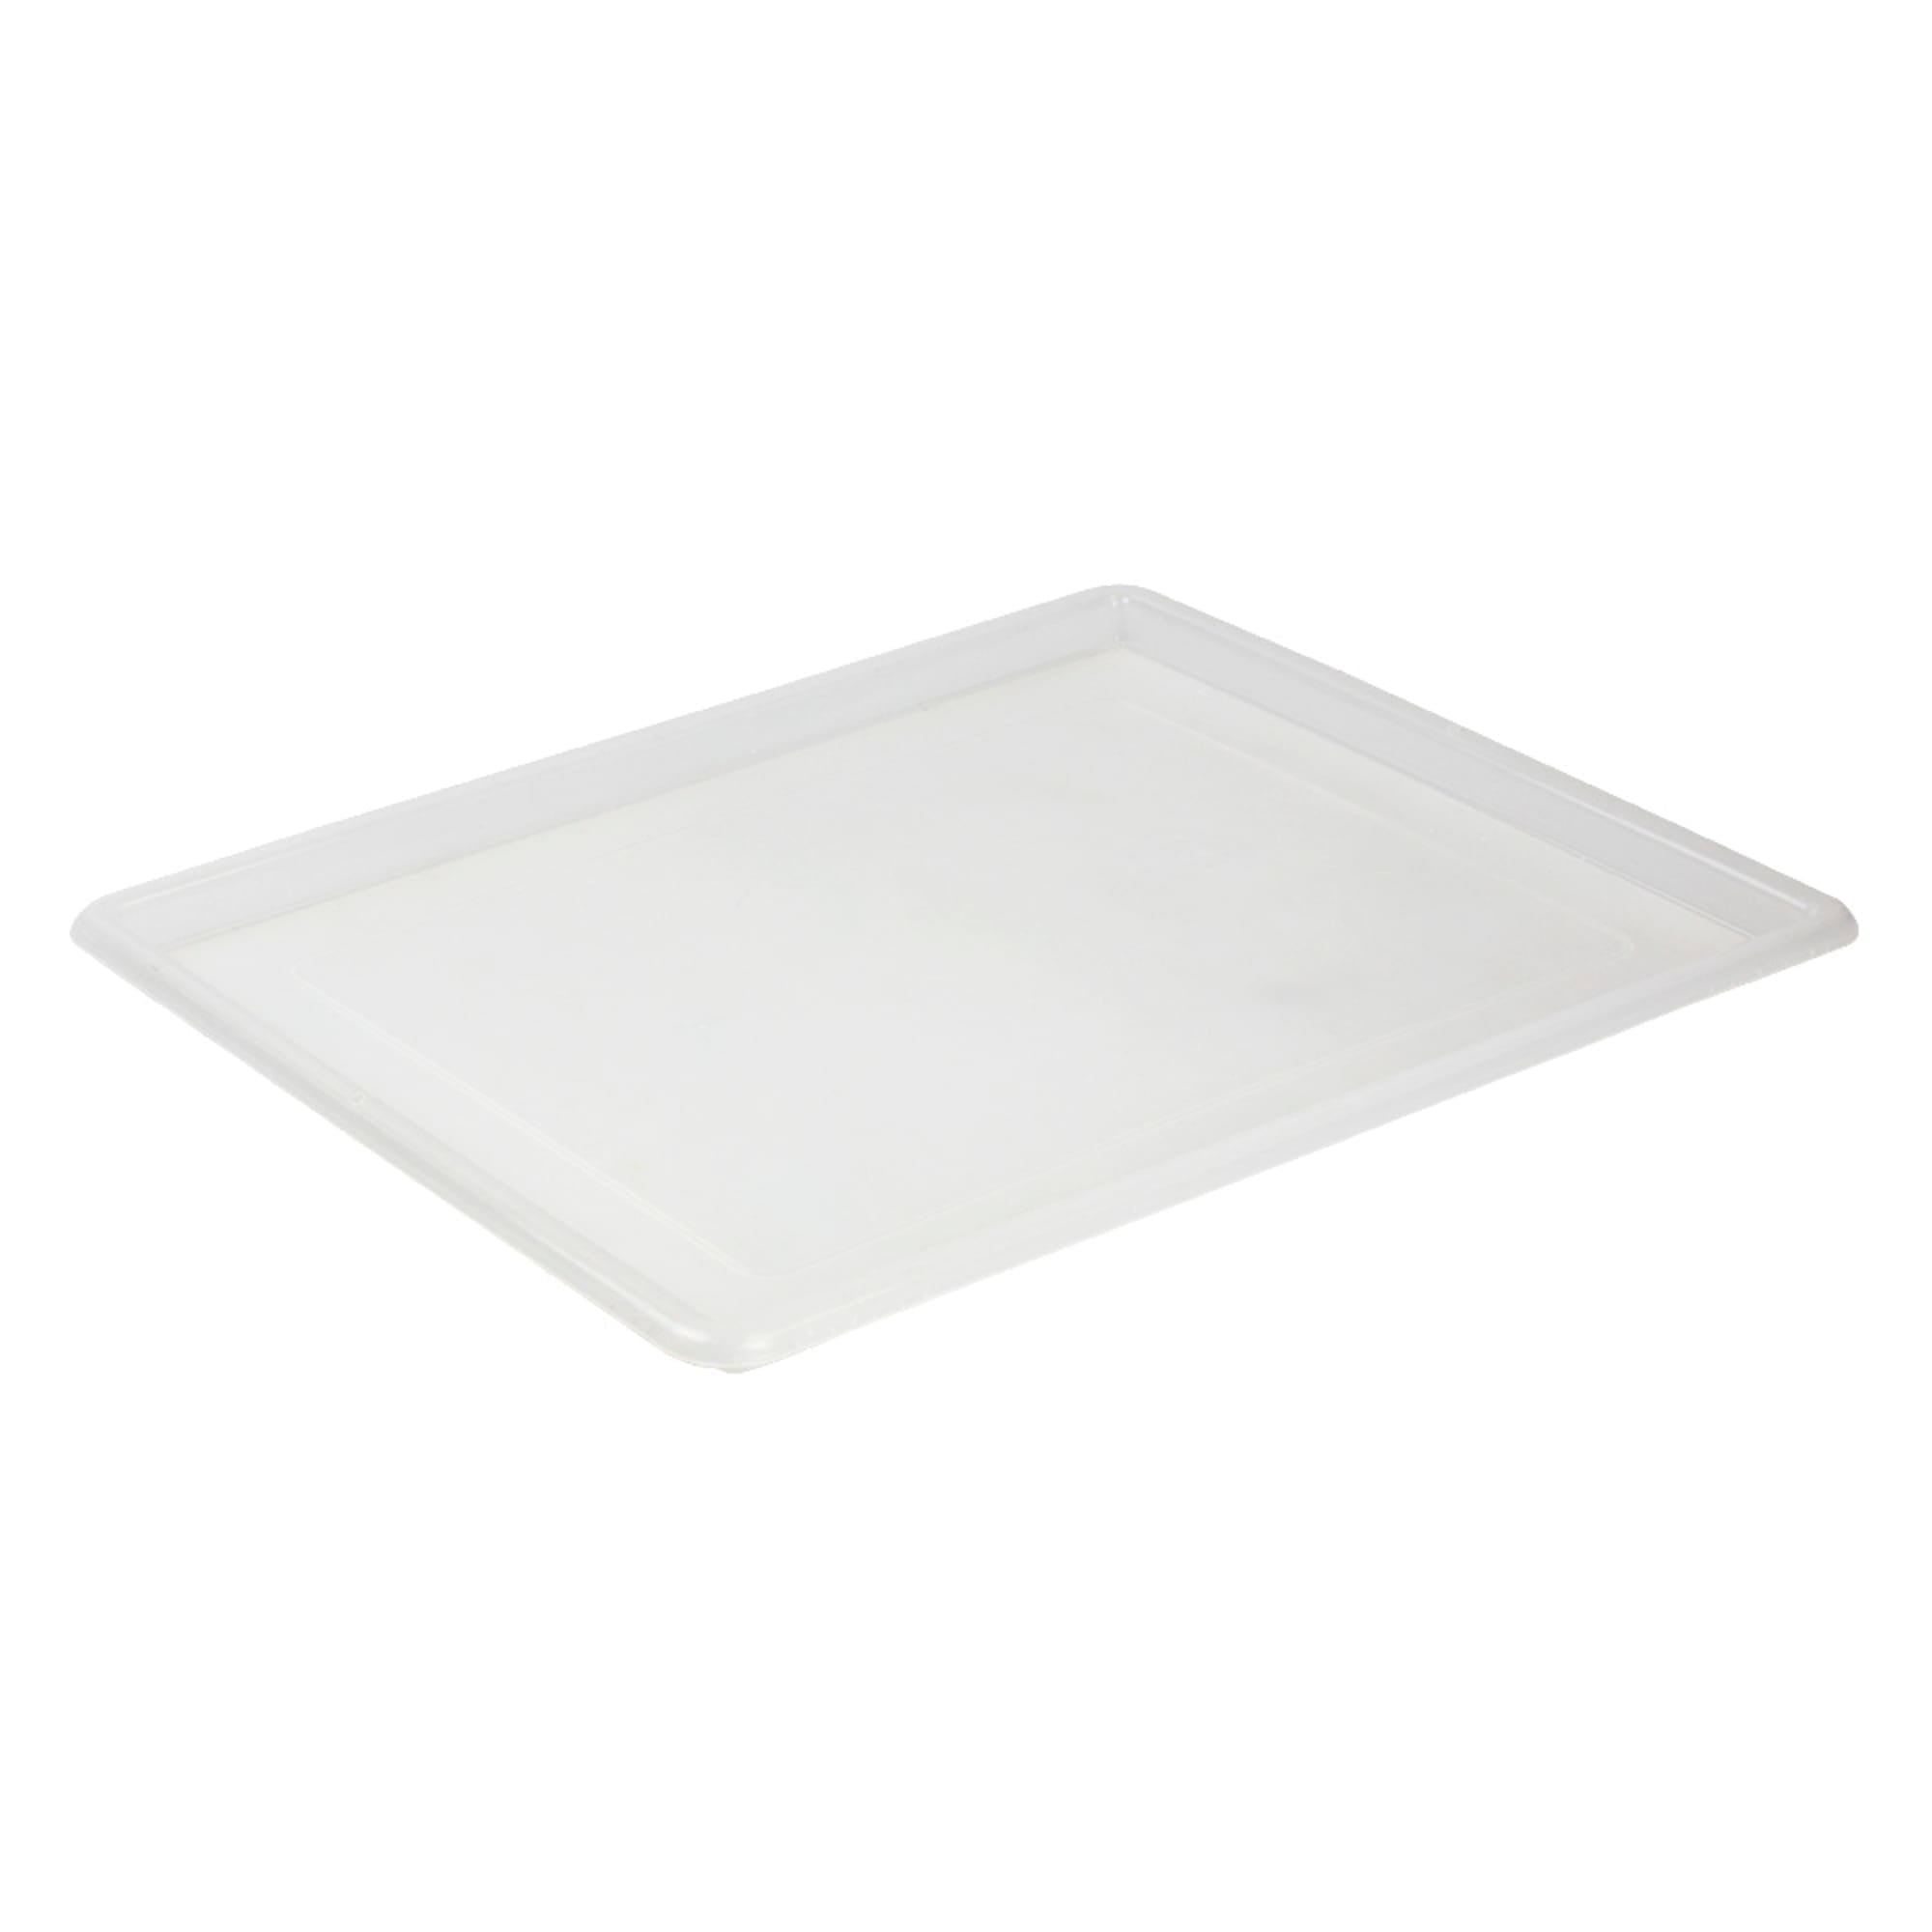 Home Basics Aluminum 2-Tier Dish Rack $40.00 EACH, CASE PACK OF 6